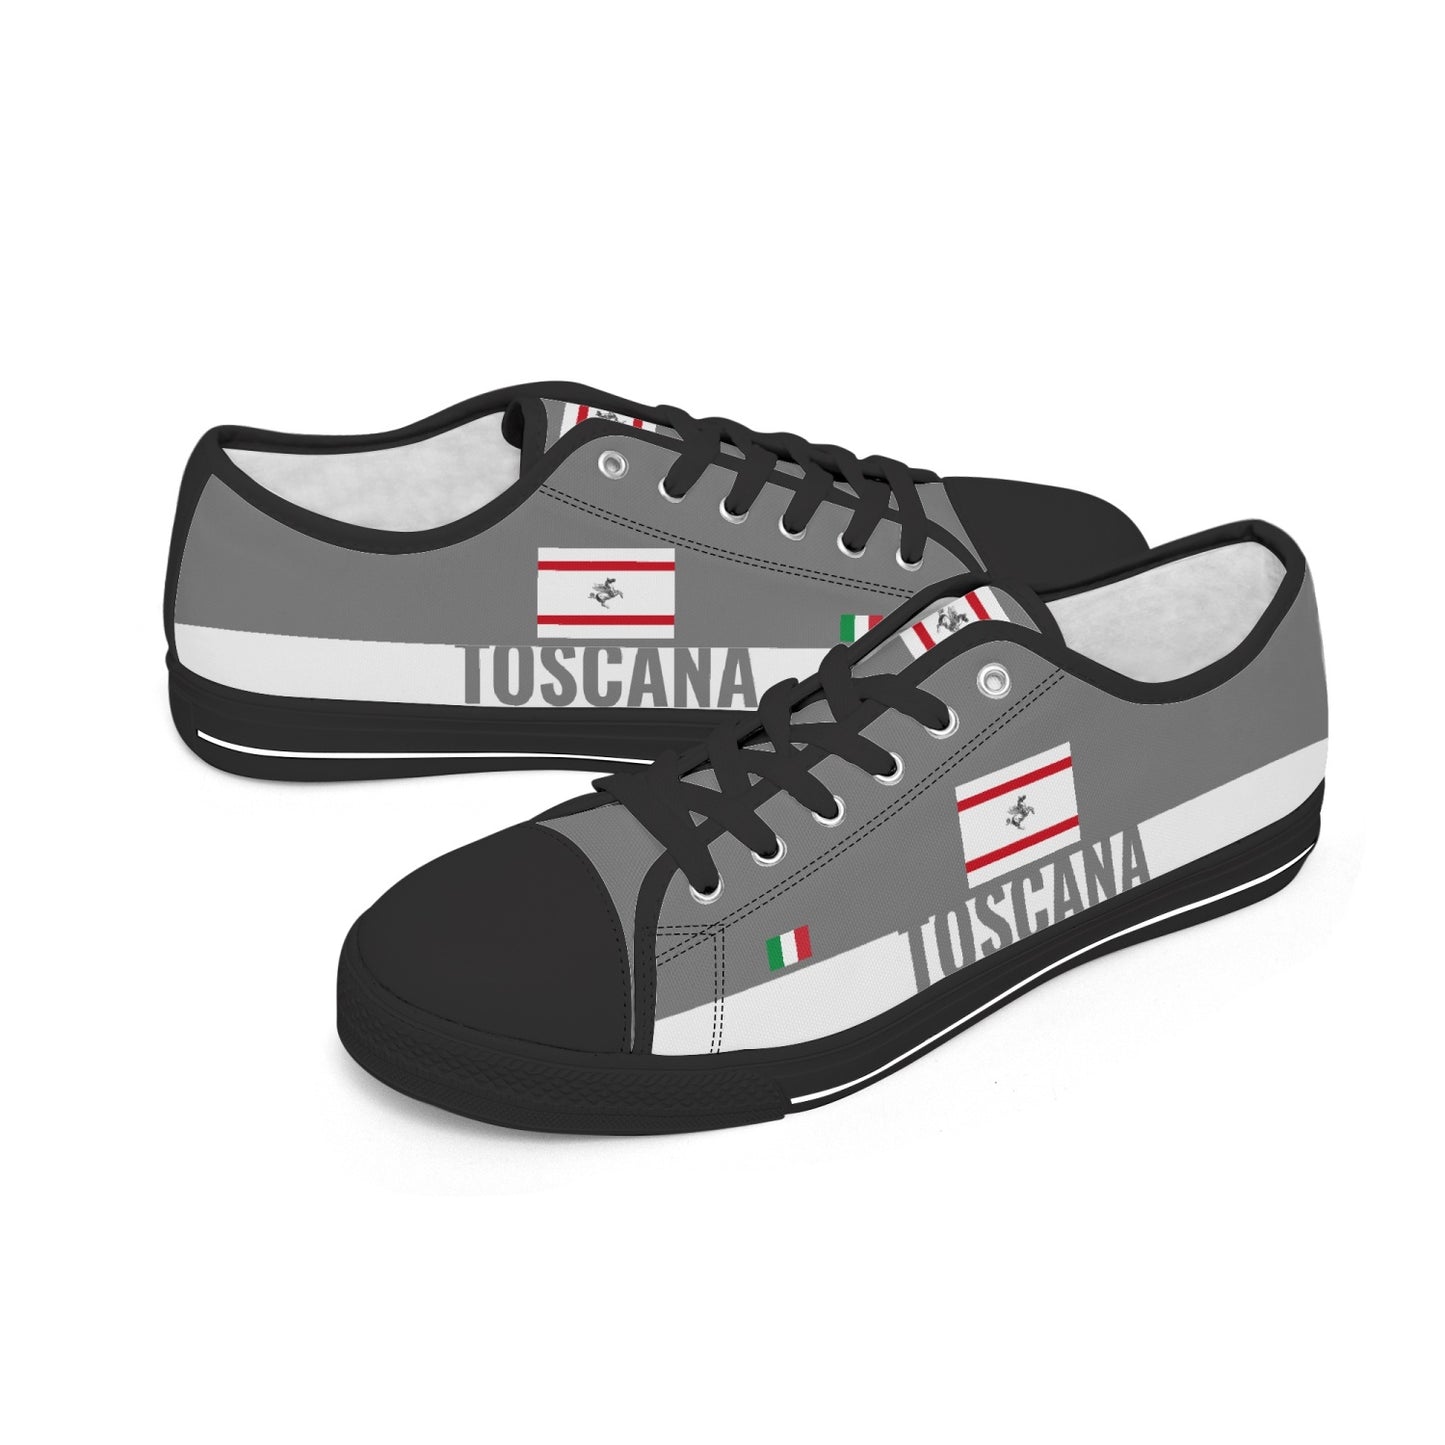 Toscana Shoes Low-top V2